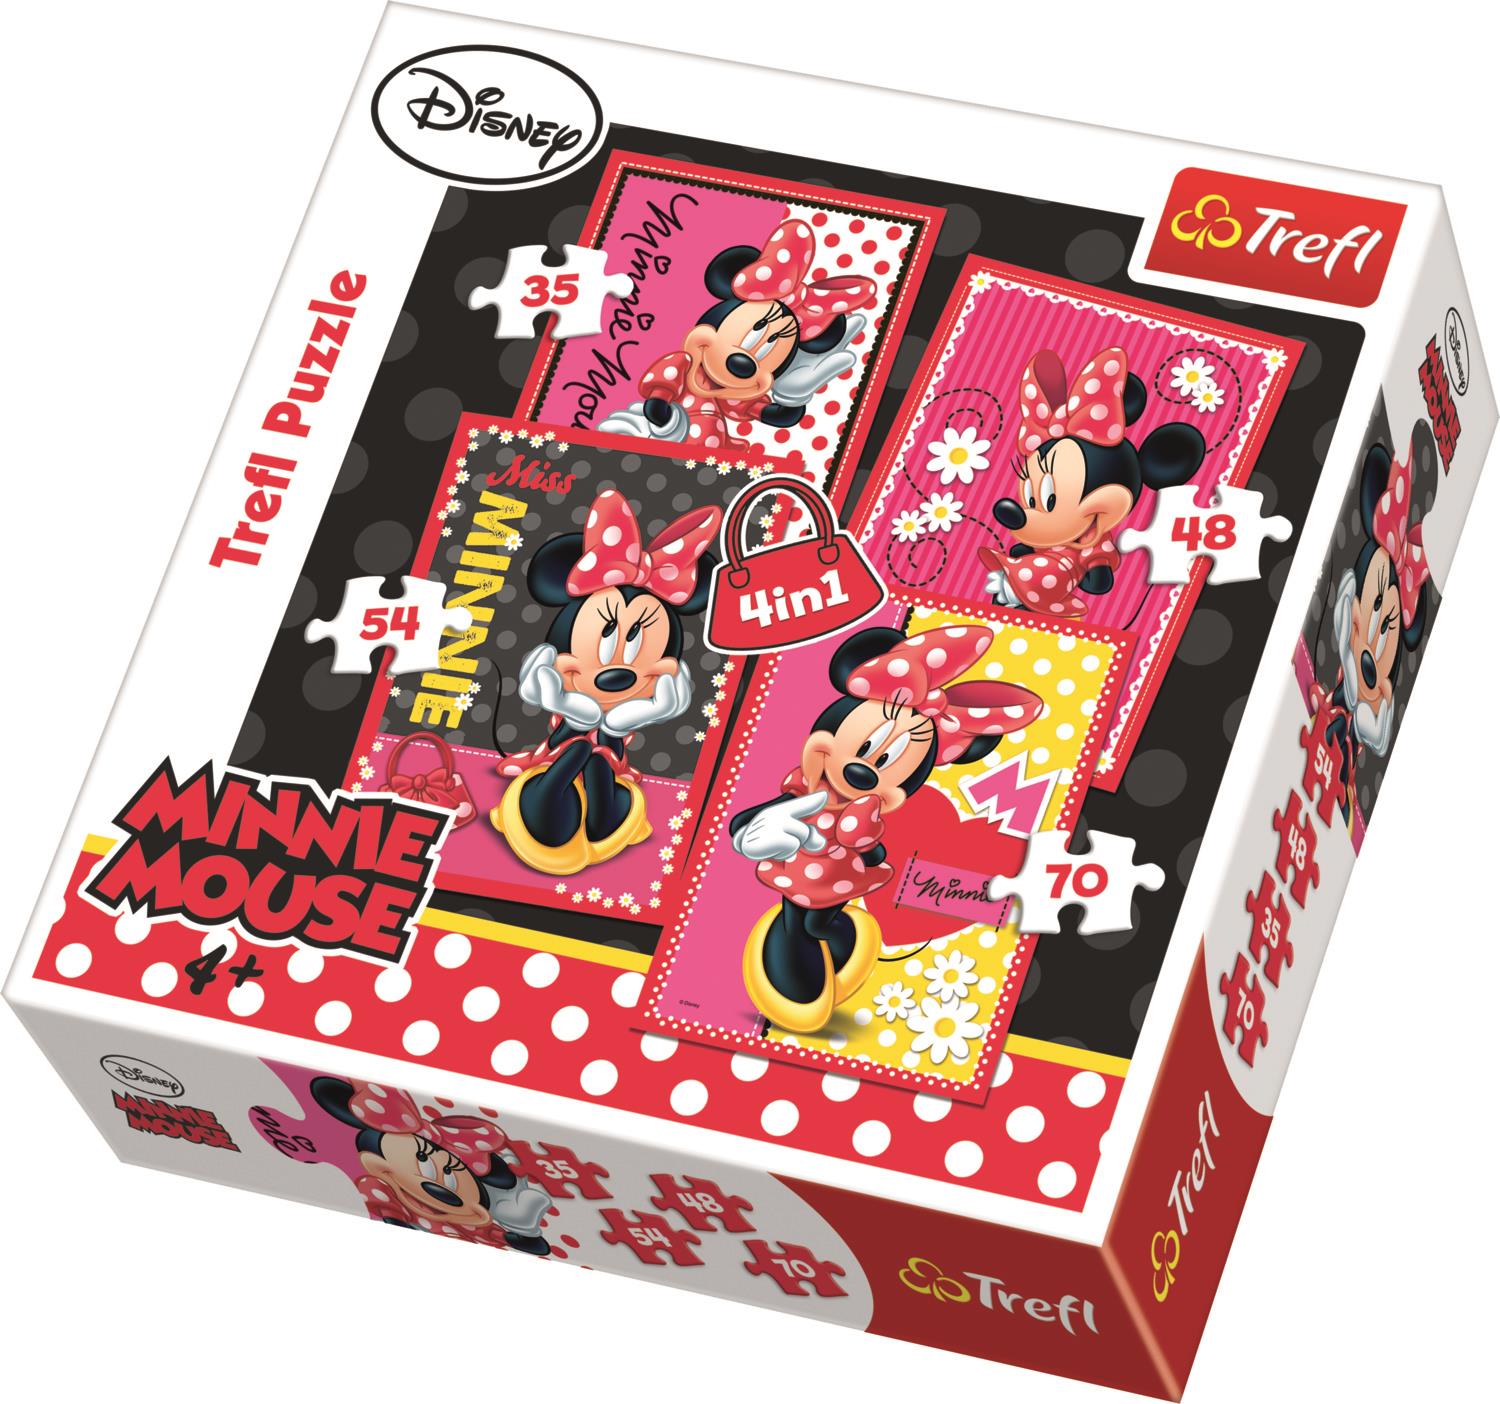 Trefl Çocuk Puzzle 34119 Beautiful Minnie, Disney 35+48+54+70 Parça 4 in 1 Puzzle